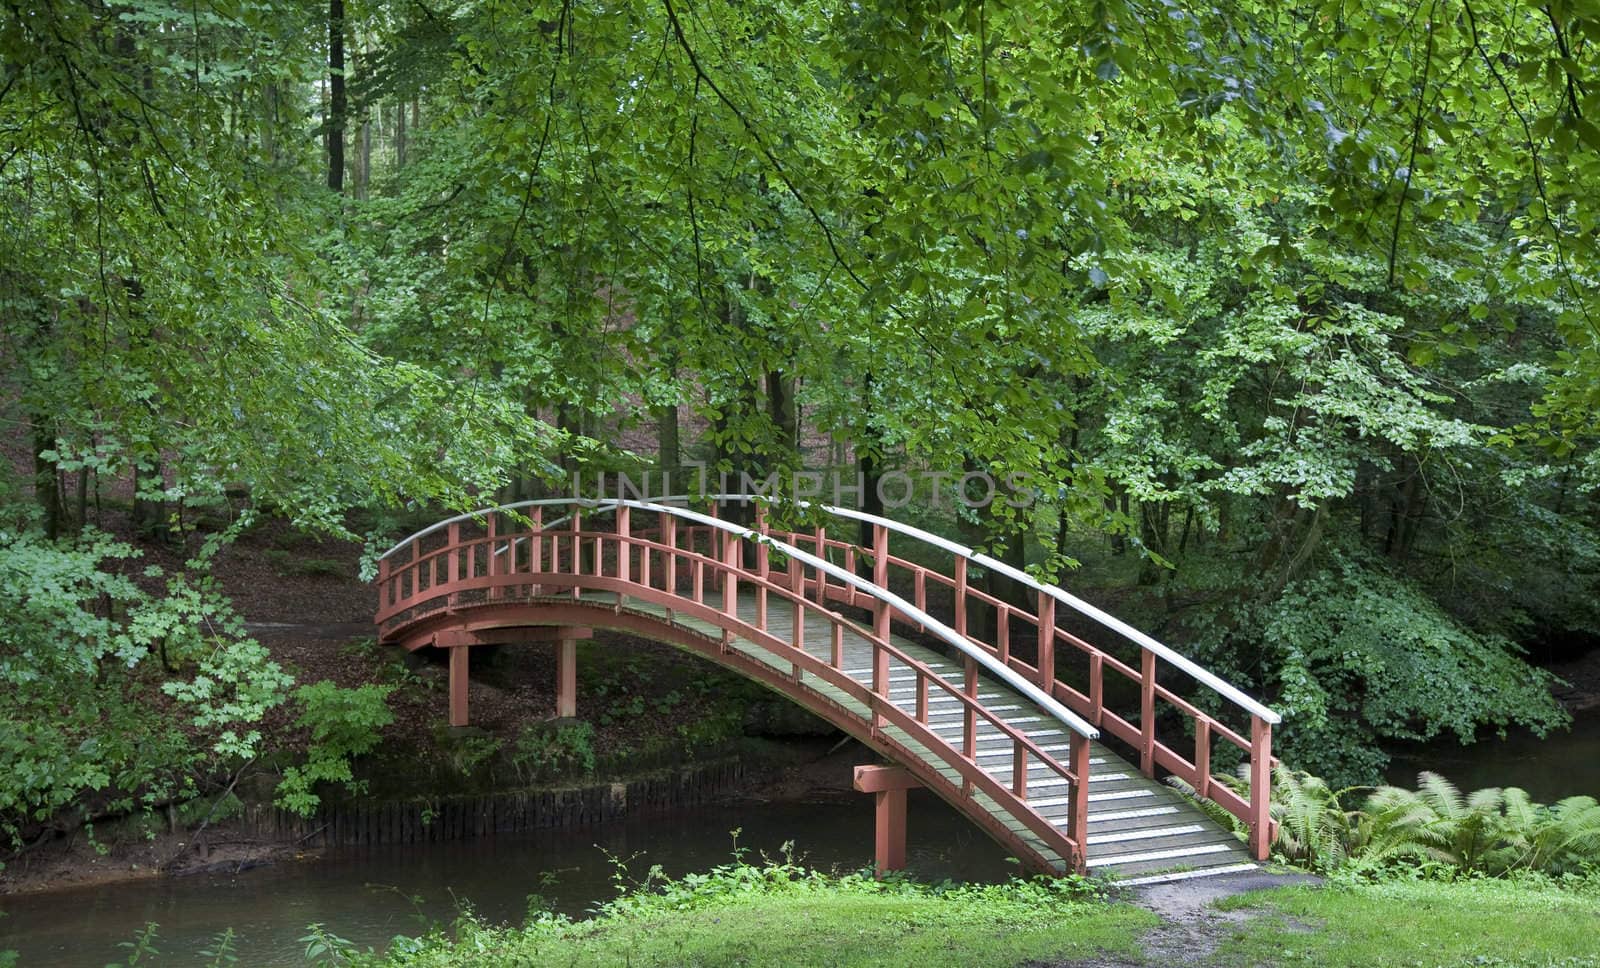 Nice old  Danish wooden bridge in park at summertime.